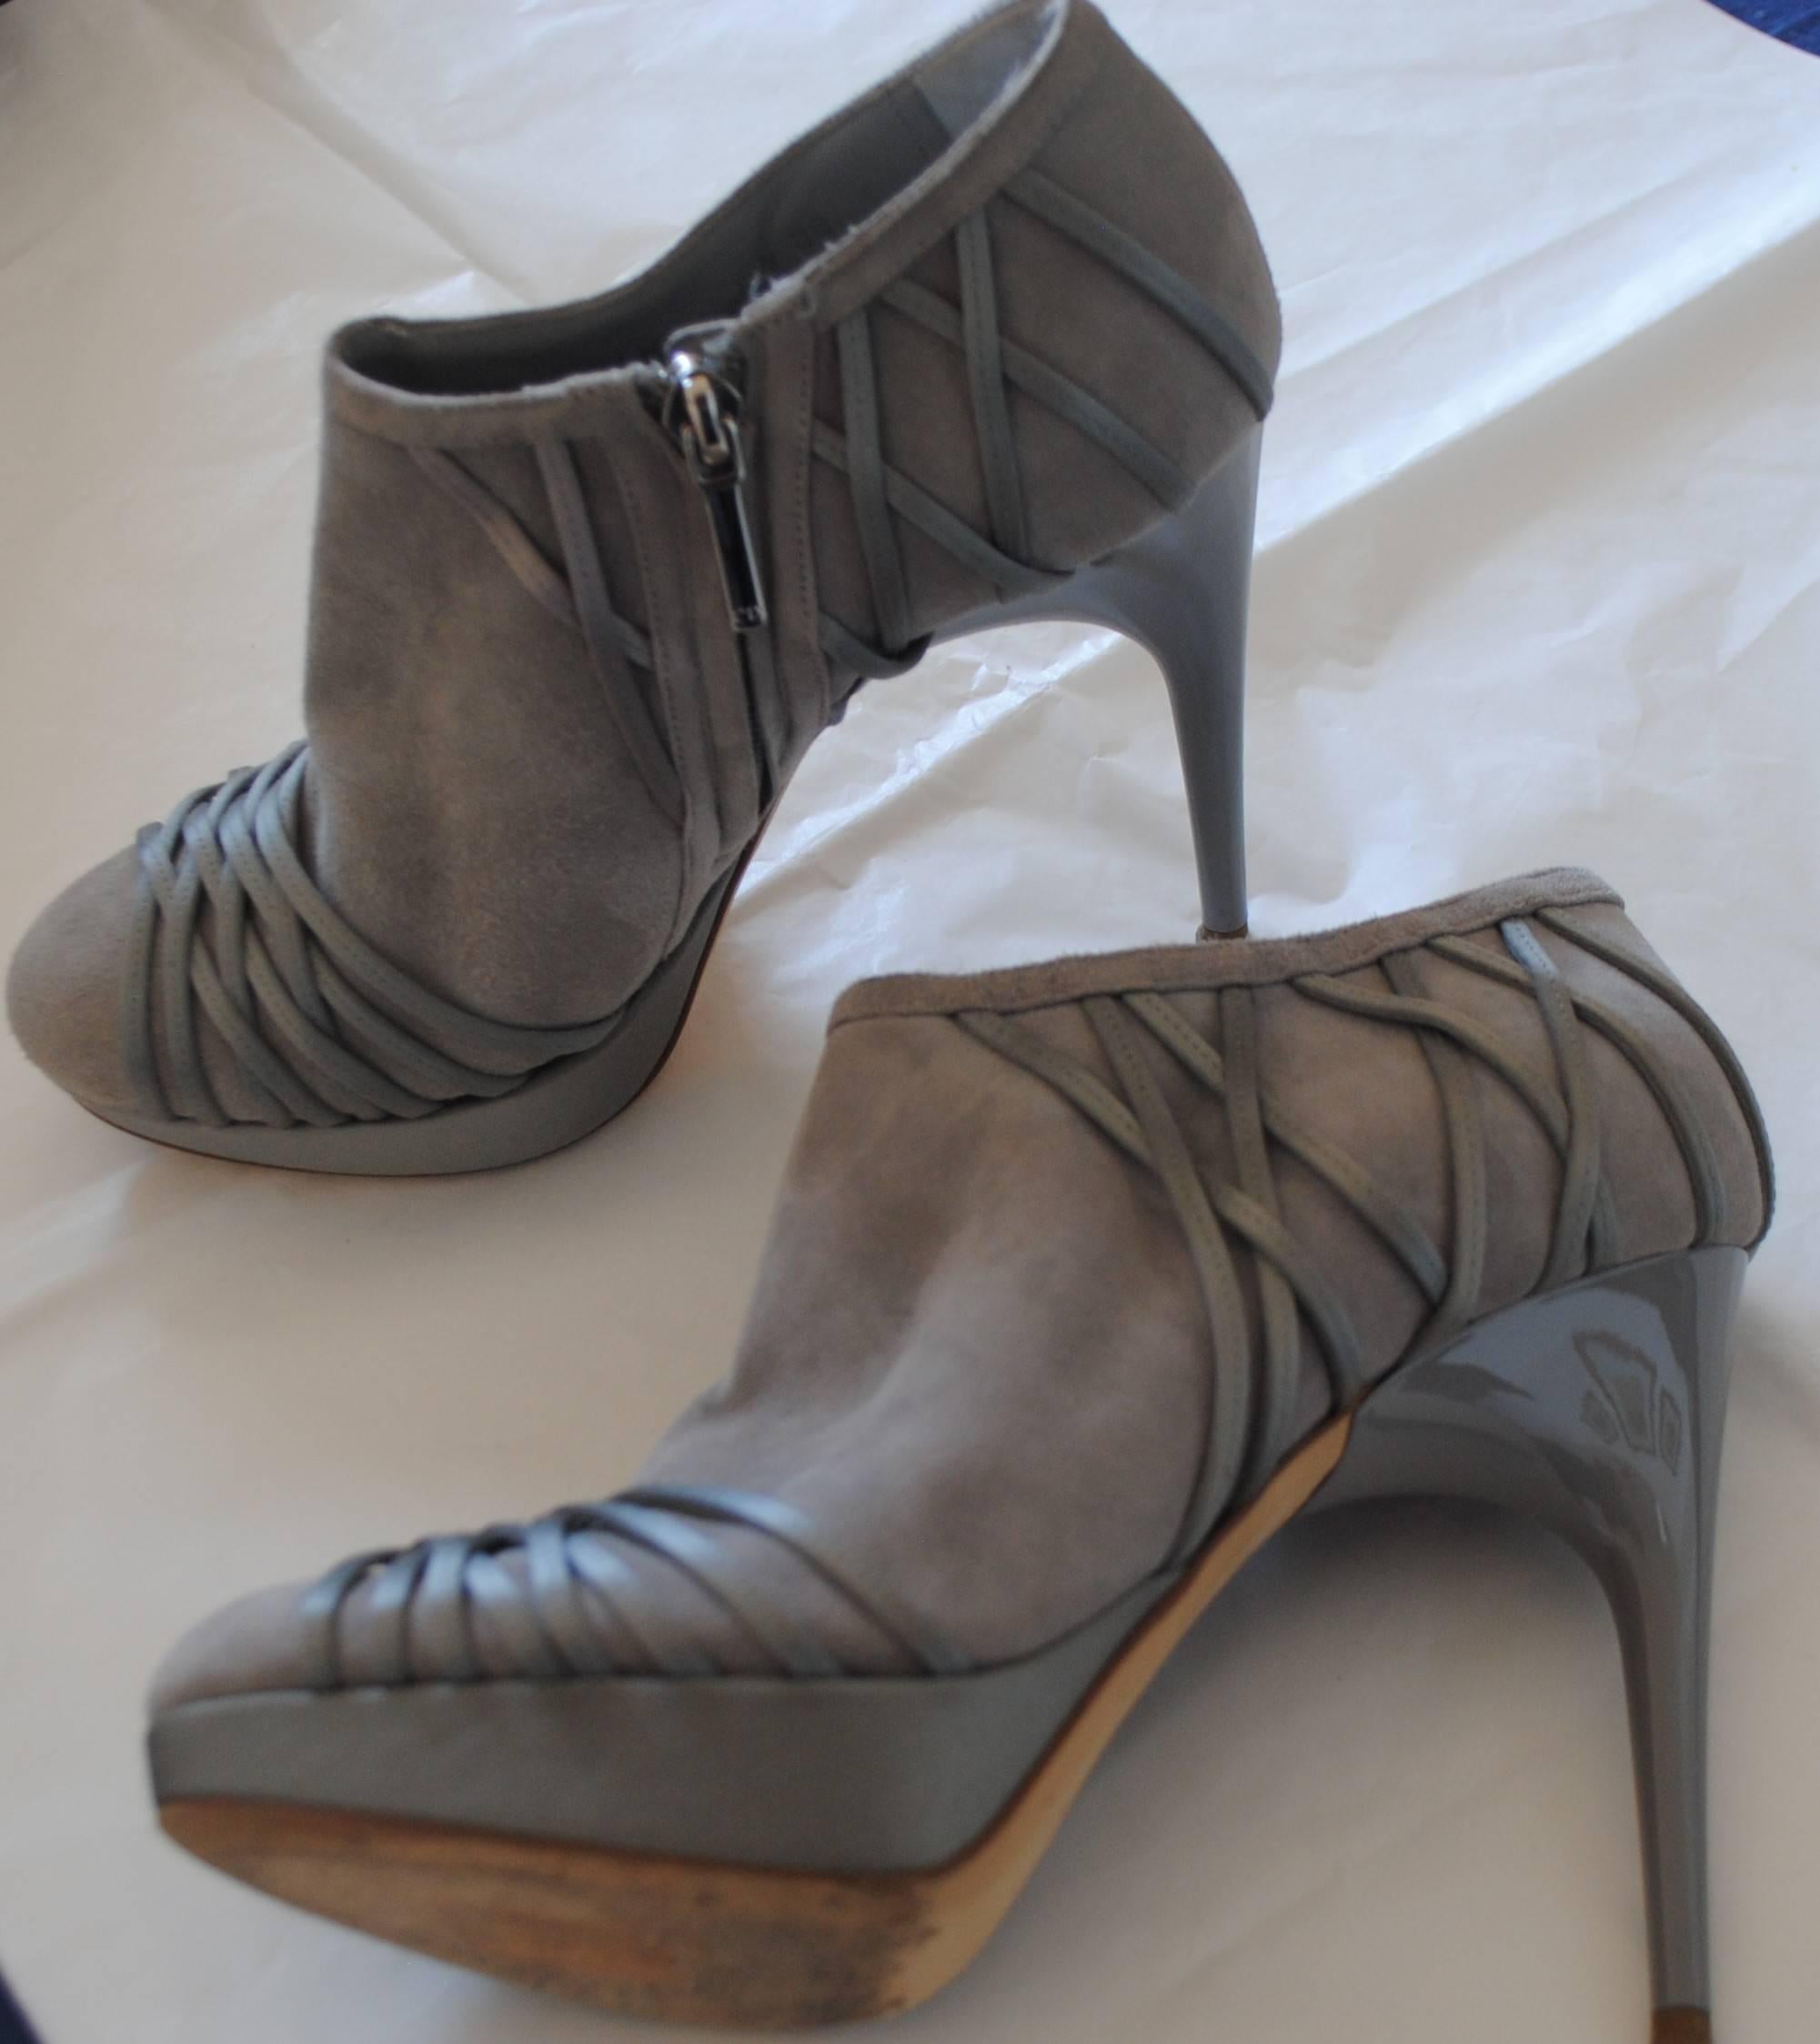 Christian Dior Grey Velvet Leather ankle boot
Grey Velvet and Leather ankle boot by Dior in size 36
Heel 11 cm